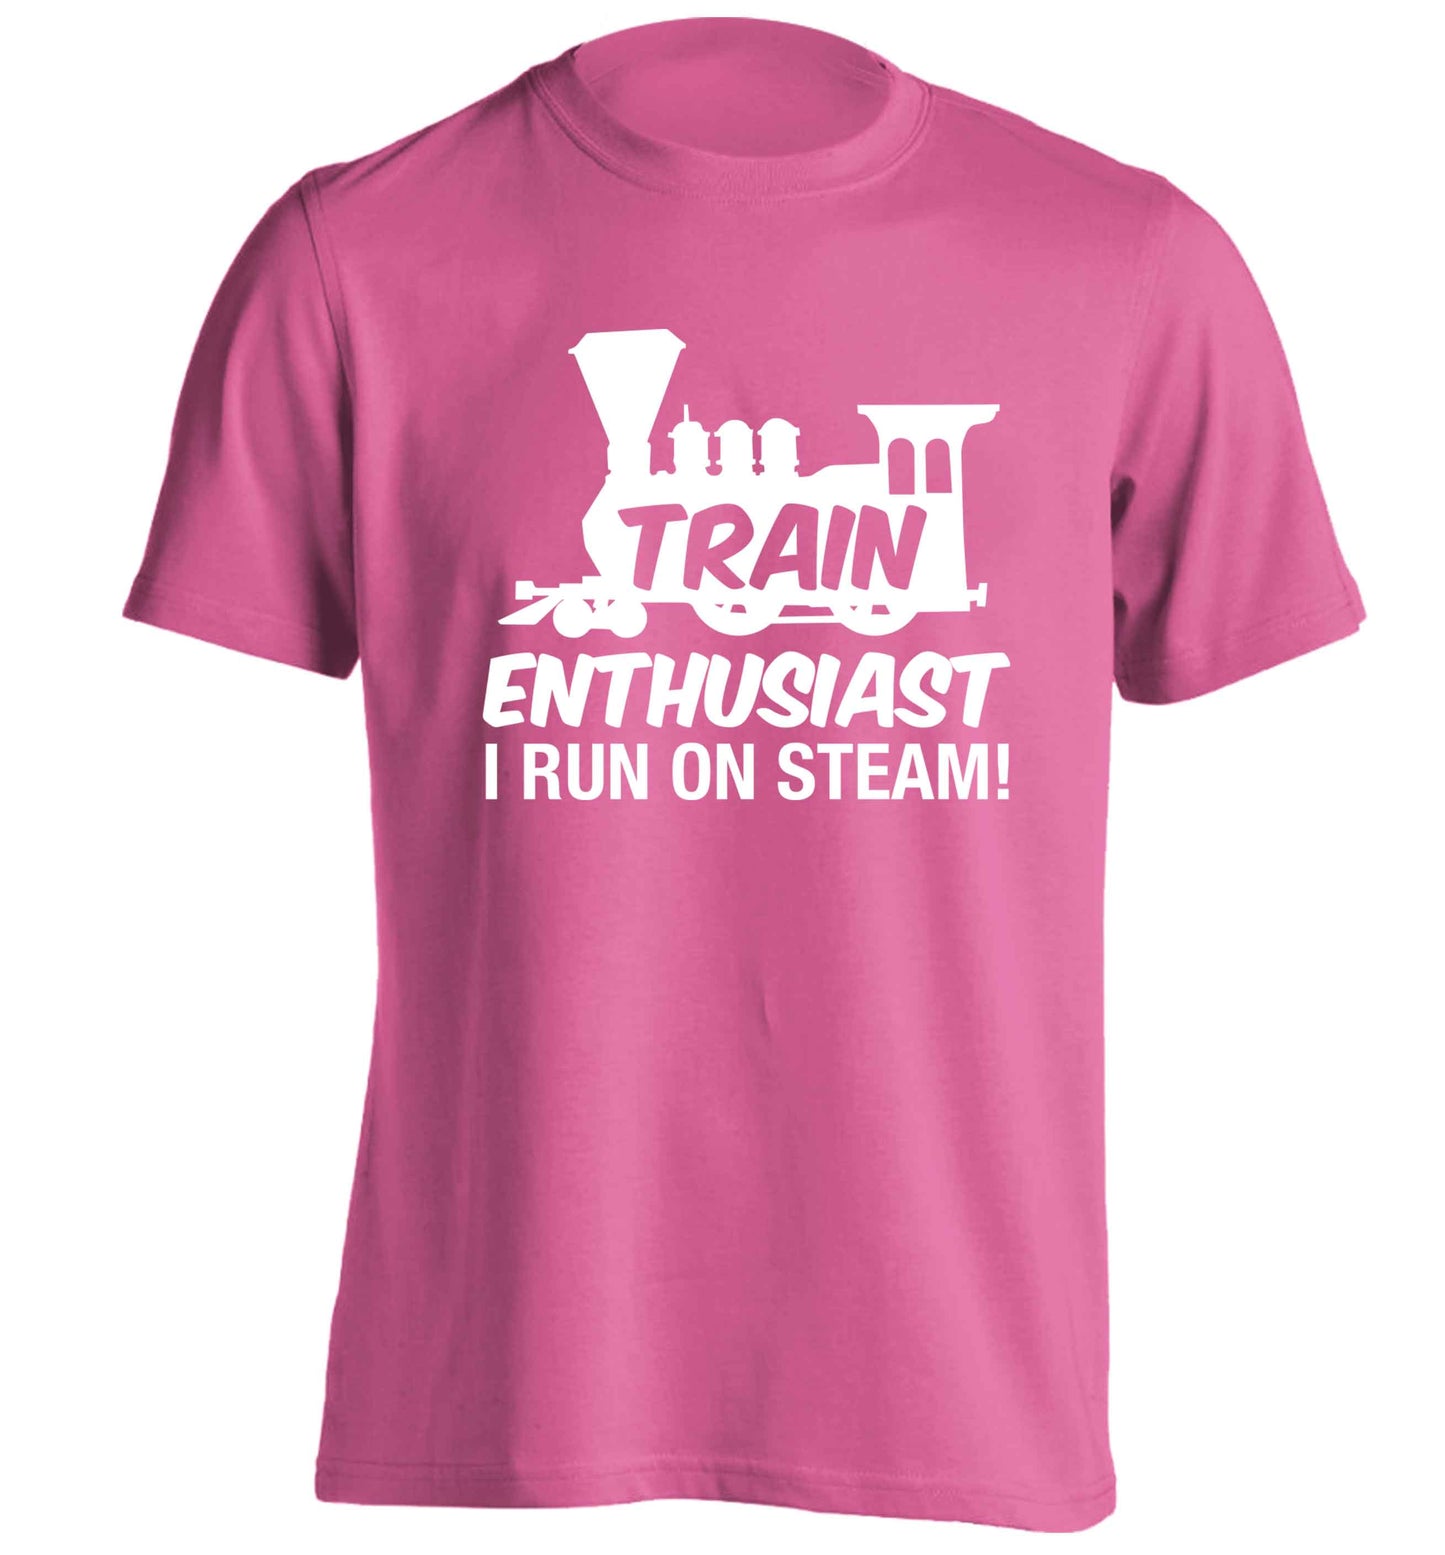 Train enthusiast I run on steam adults unisex pink Tshirt 2XL